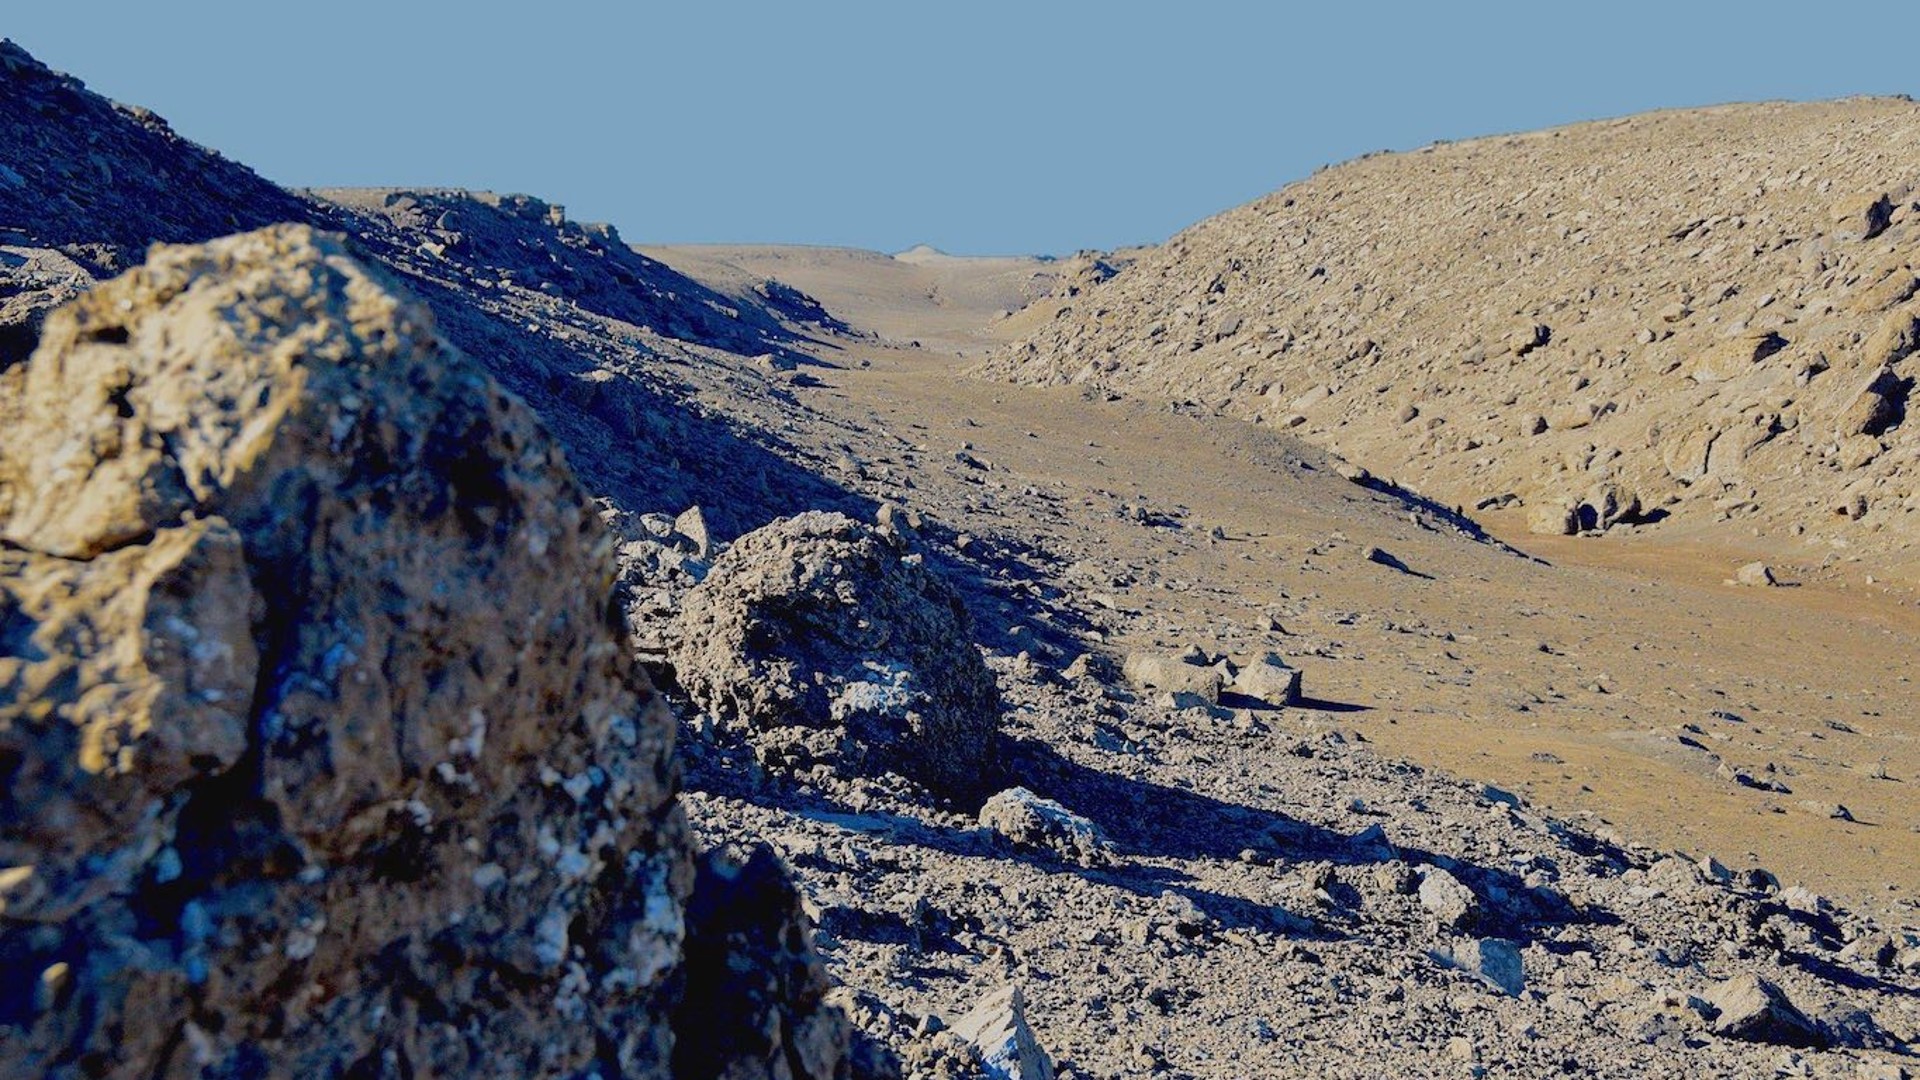 A month on 'Mars': Trekking through Ingenuity Valley